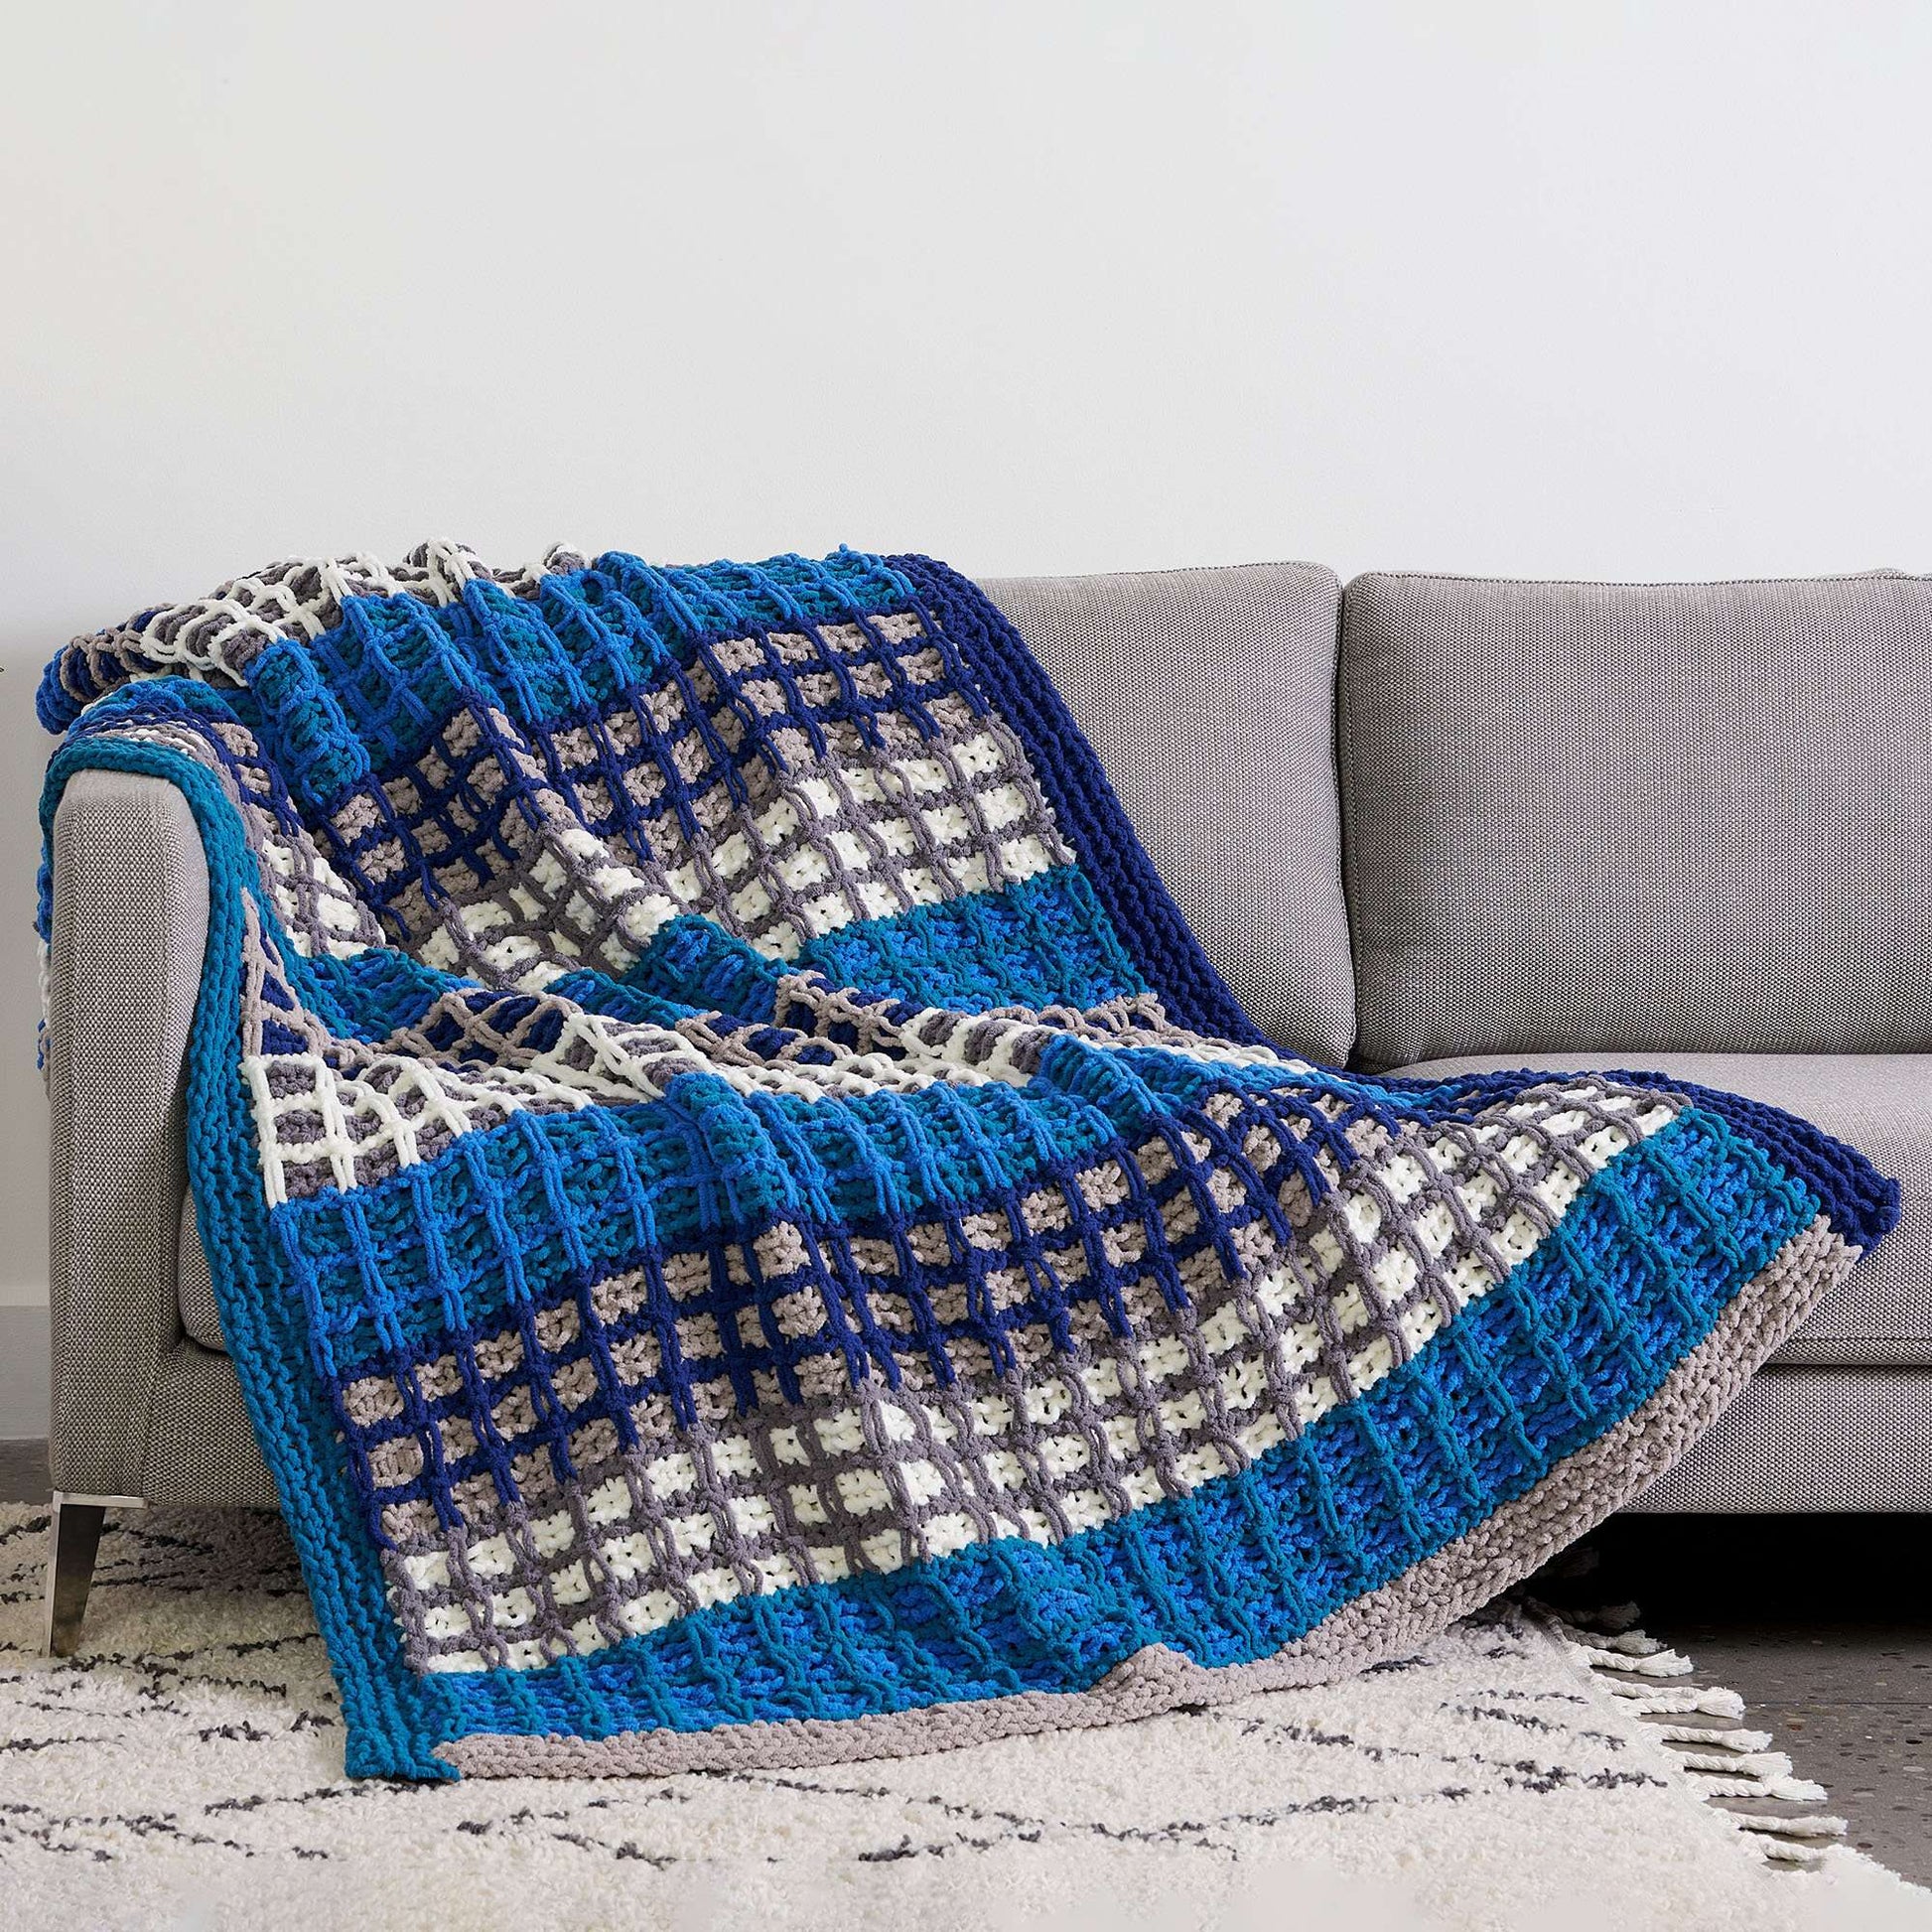 Free Bernat Knitting Grids Blanket Pattern